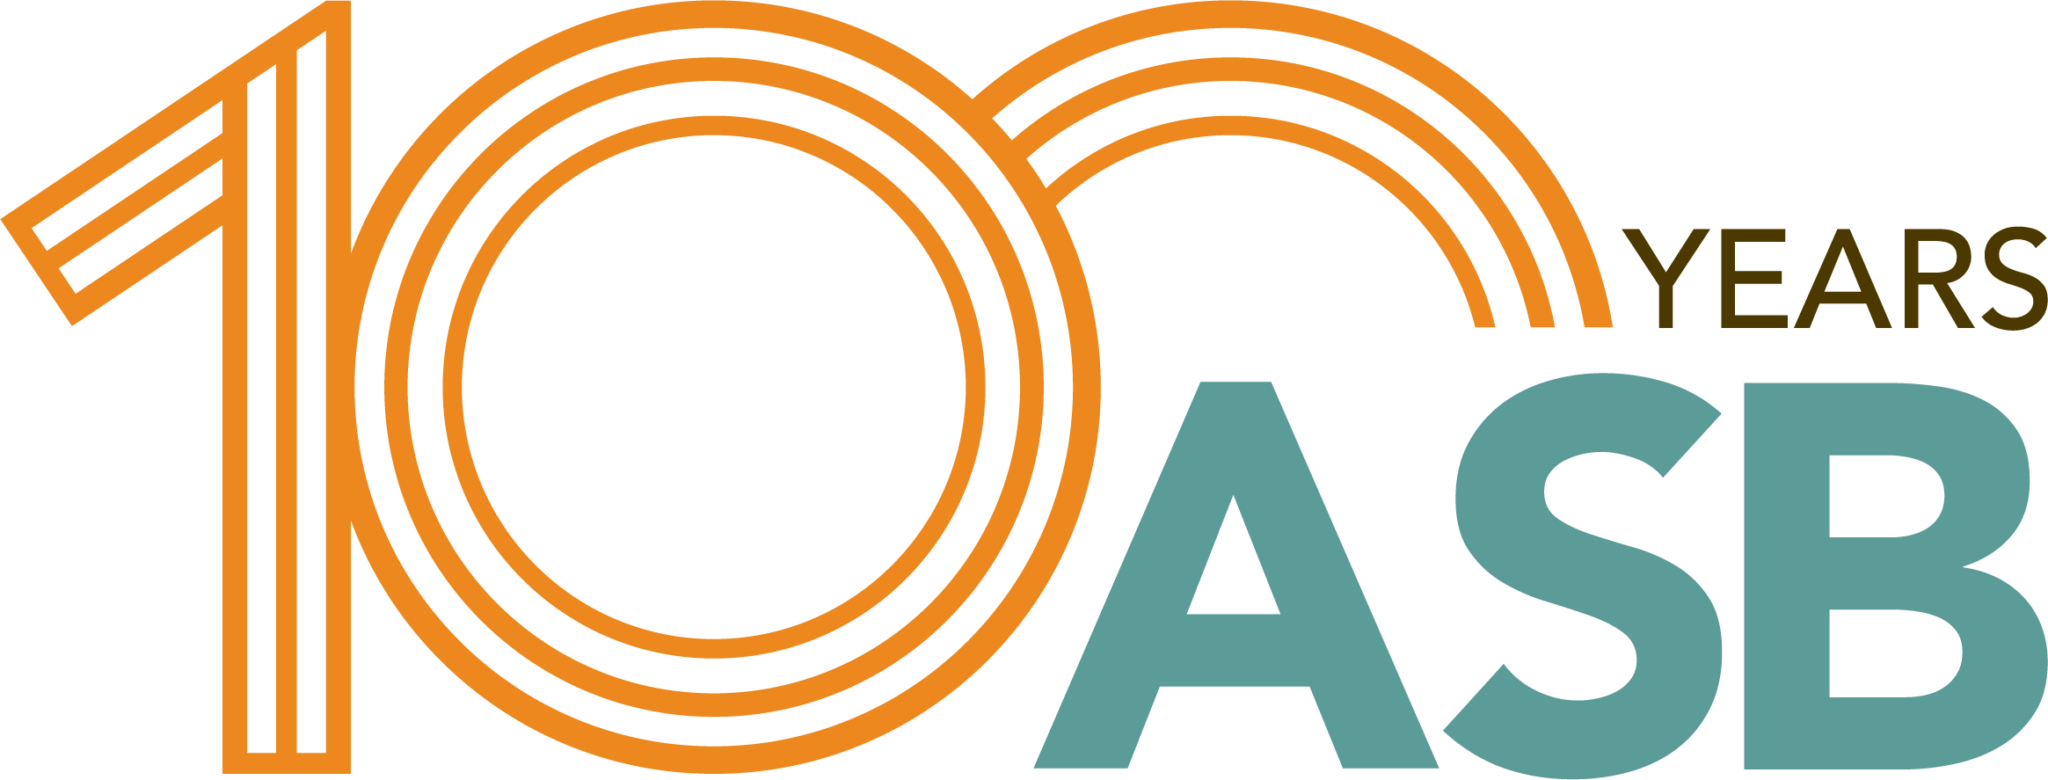 Logo Use Policy American Society of Baking